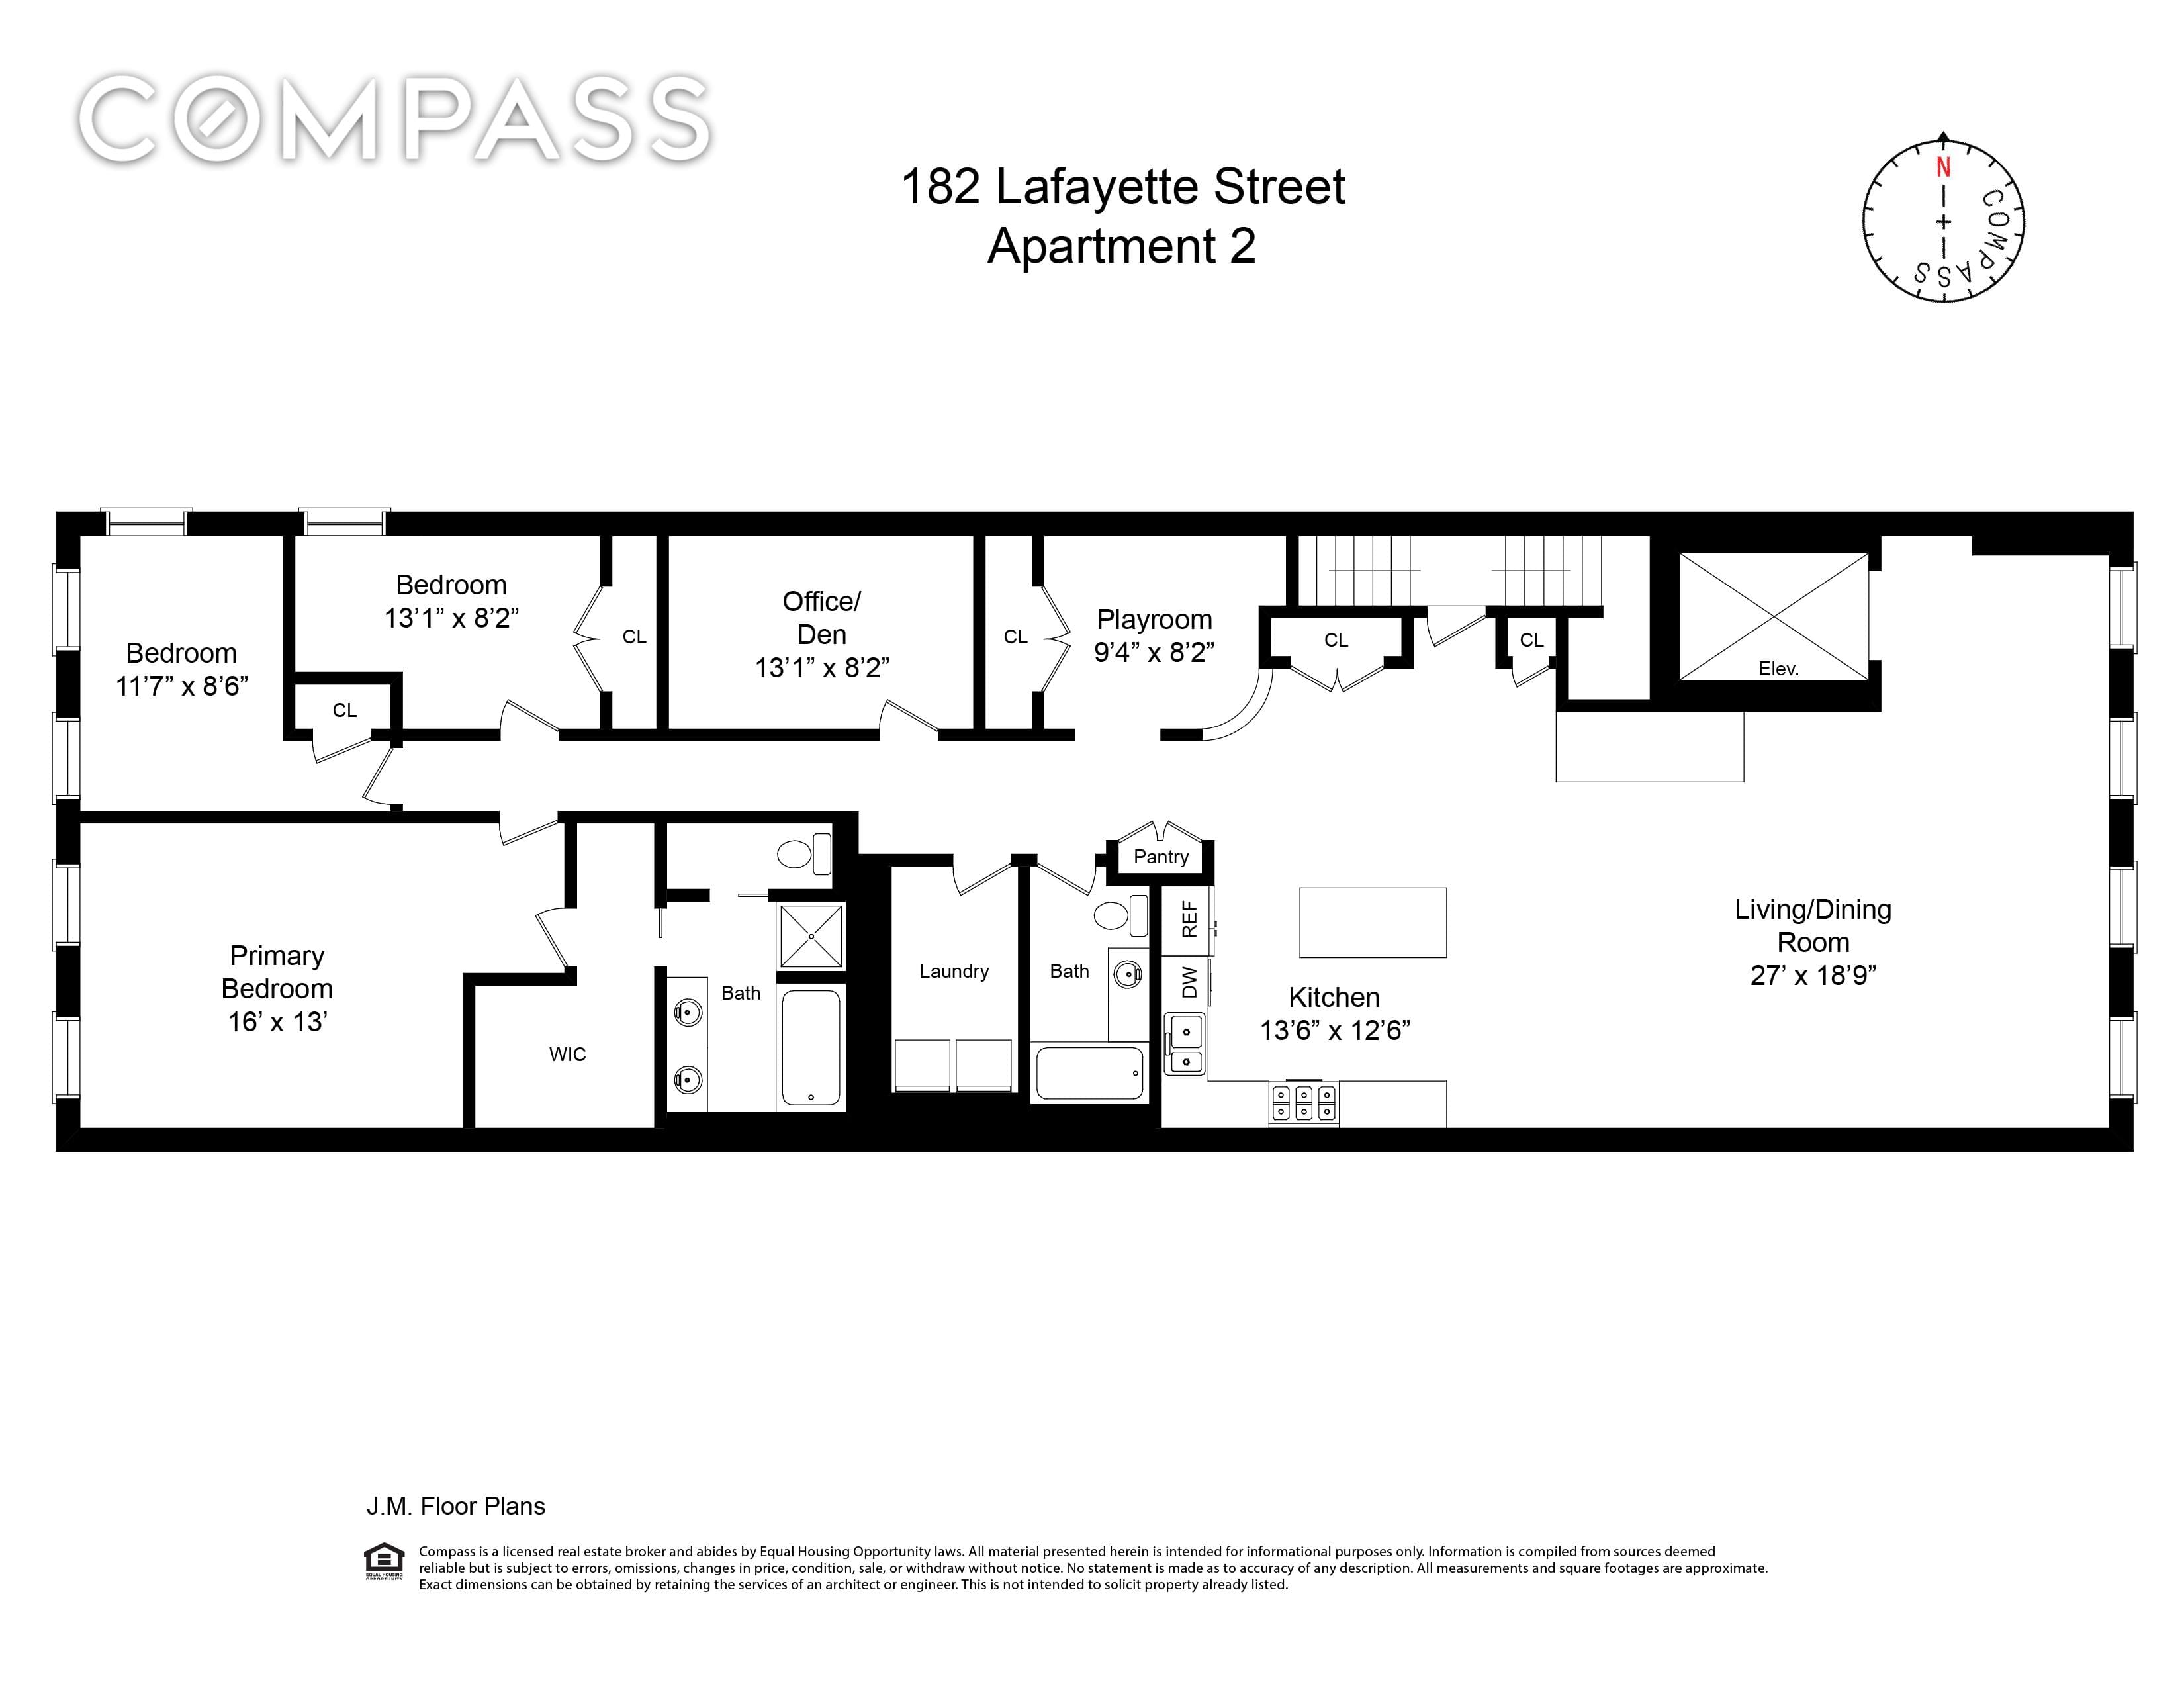 Floor plan of 182 Lafayette Street #2 in Manhattan, NEW YORK, NY 10013